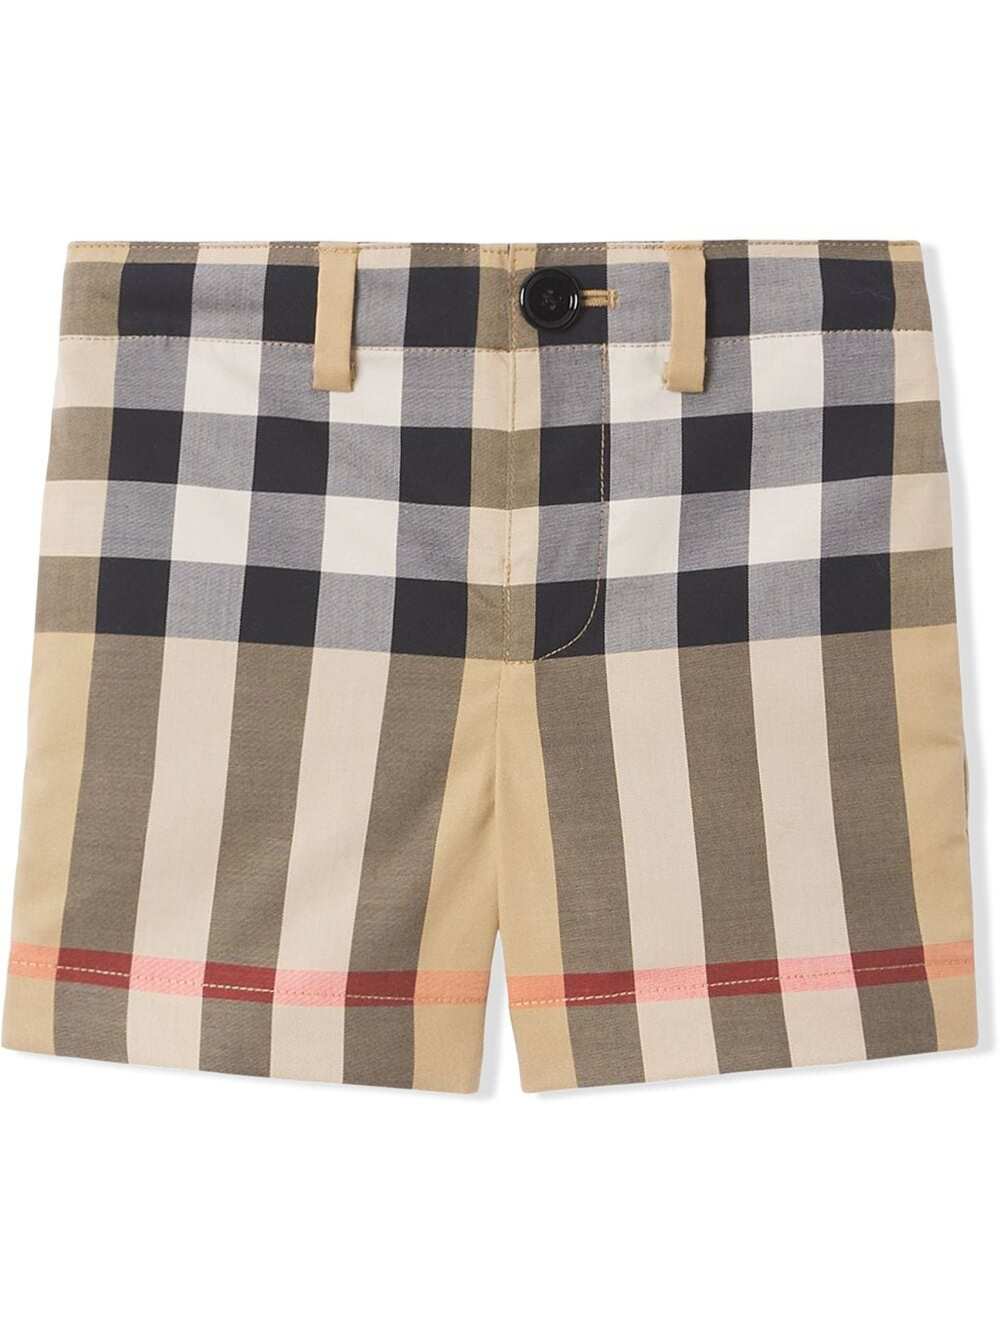 Burberry Boys Vintage Check Cotton Shorts